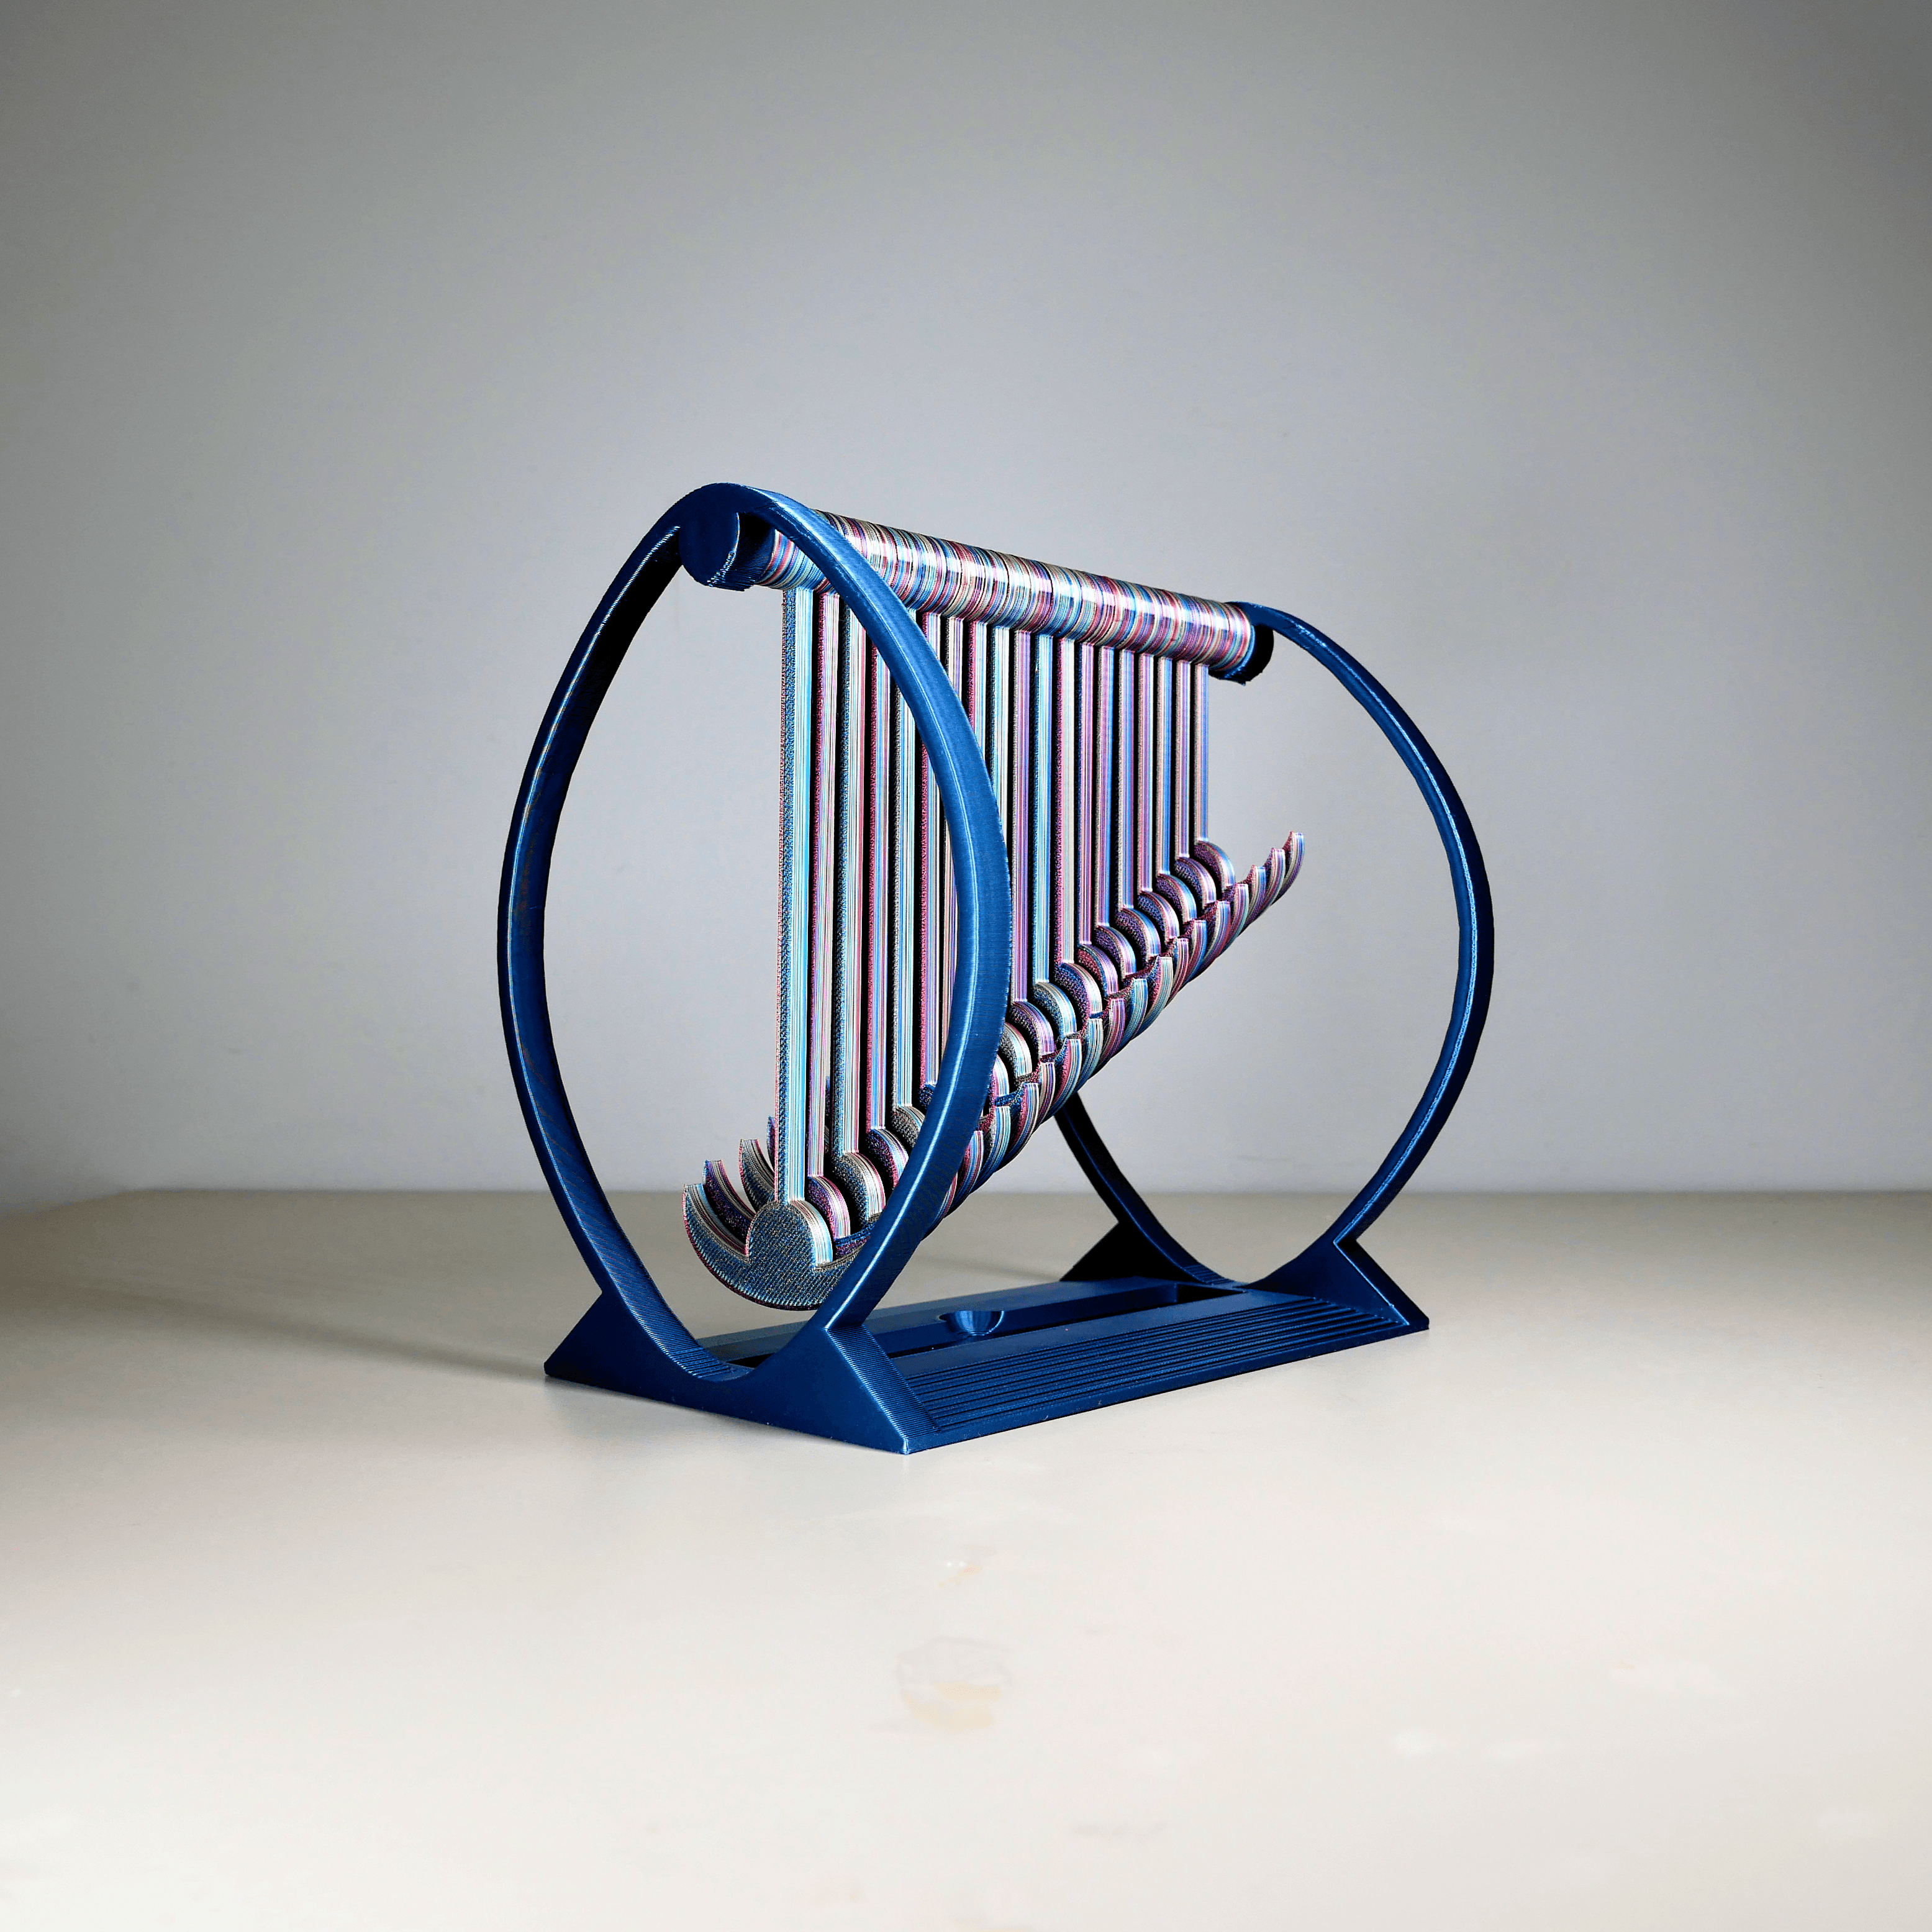 Pendulum Wave Toy with 3 pendula sets 3d model